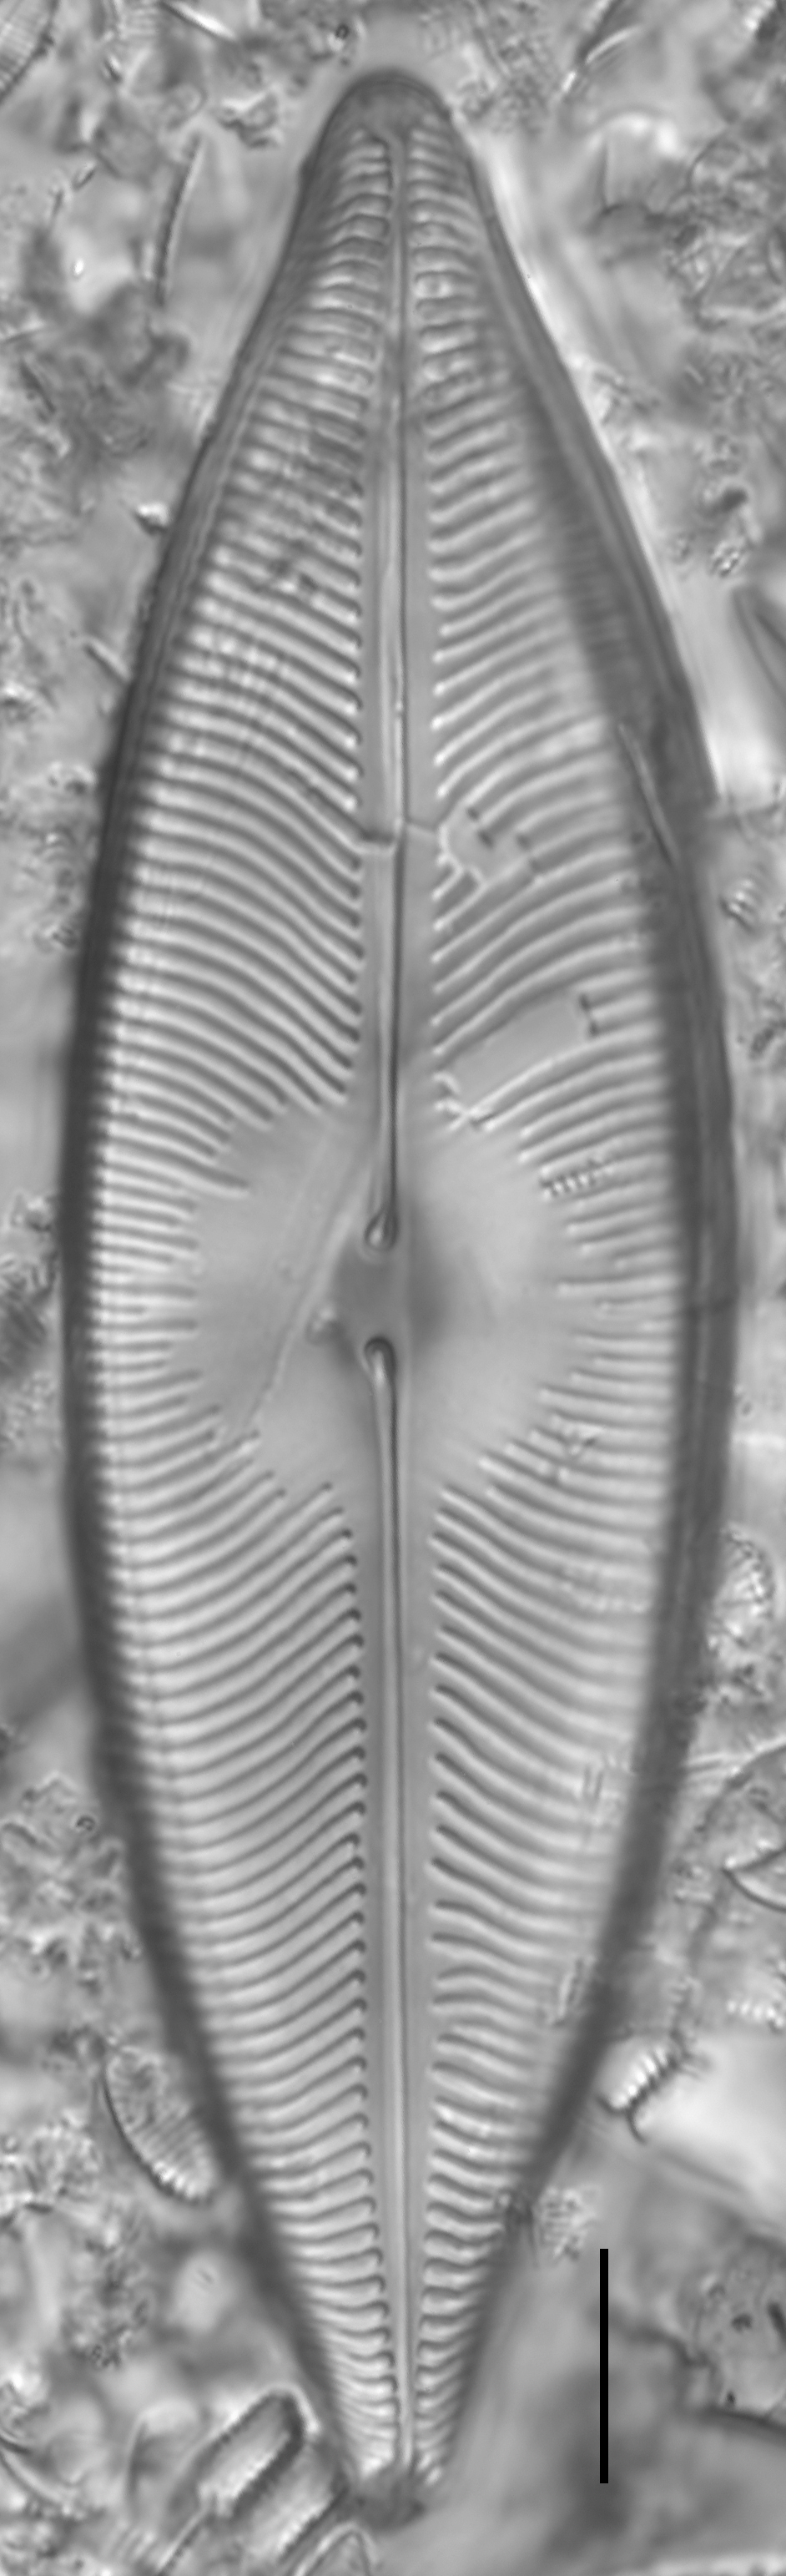 Pinnunavis elegans LM2